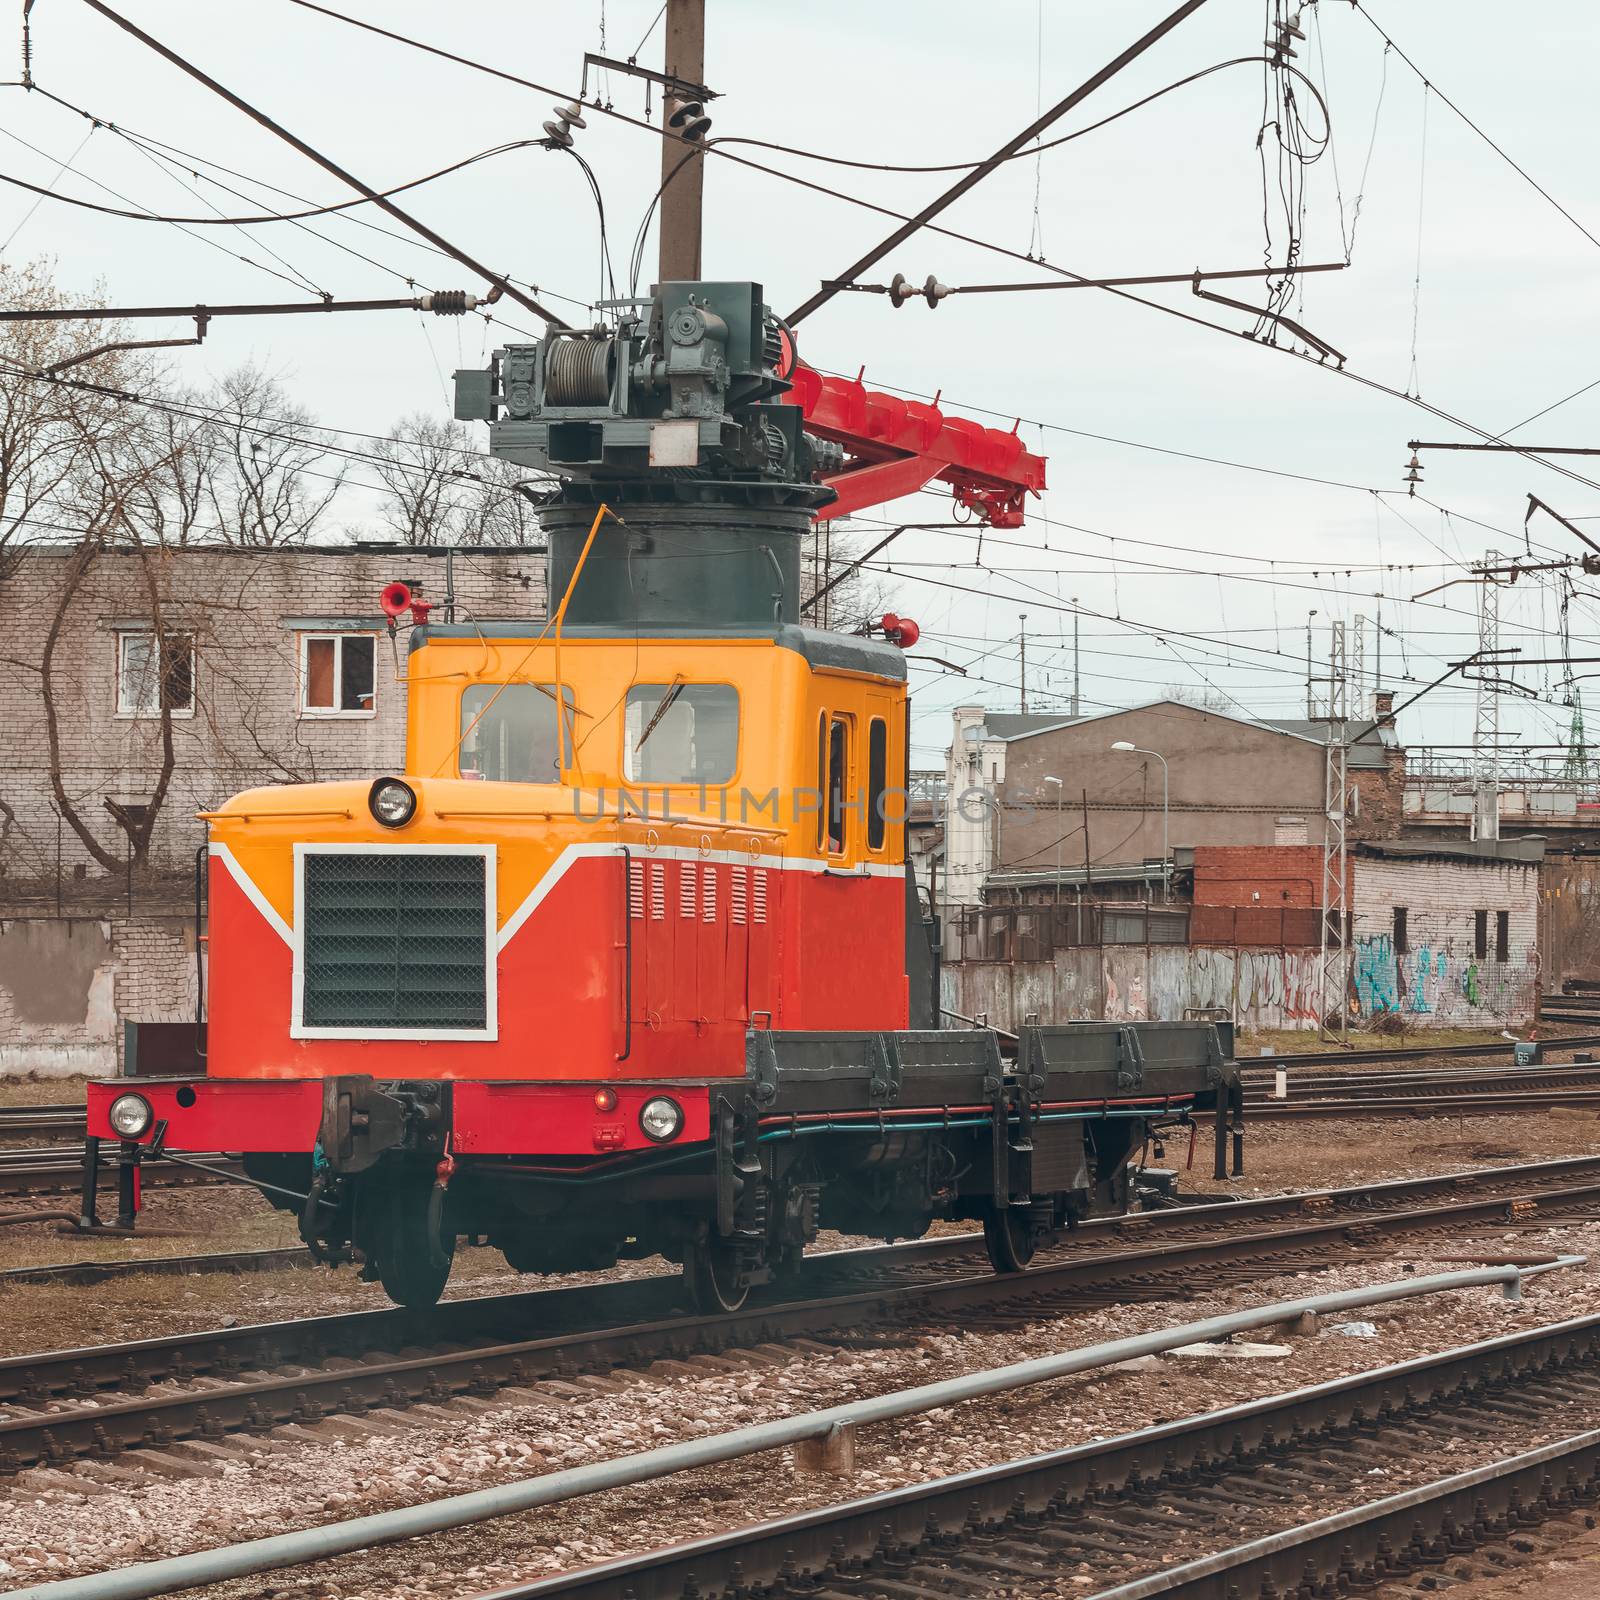 Small industry repair train. Professional transportation equipment